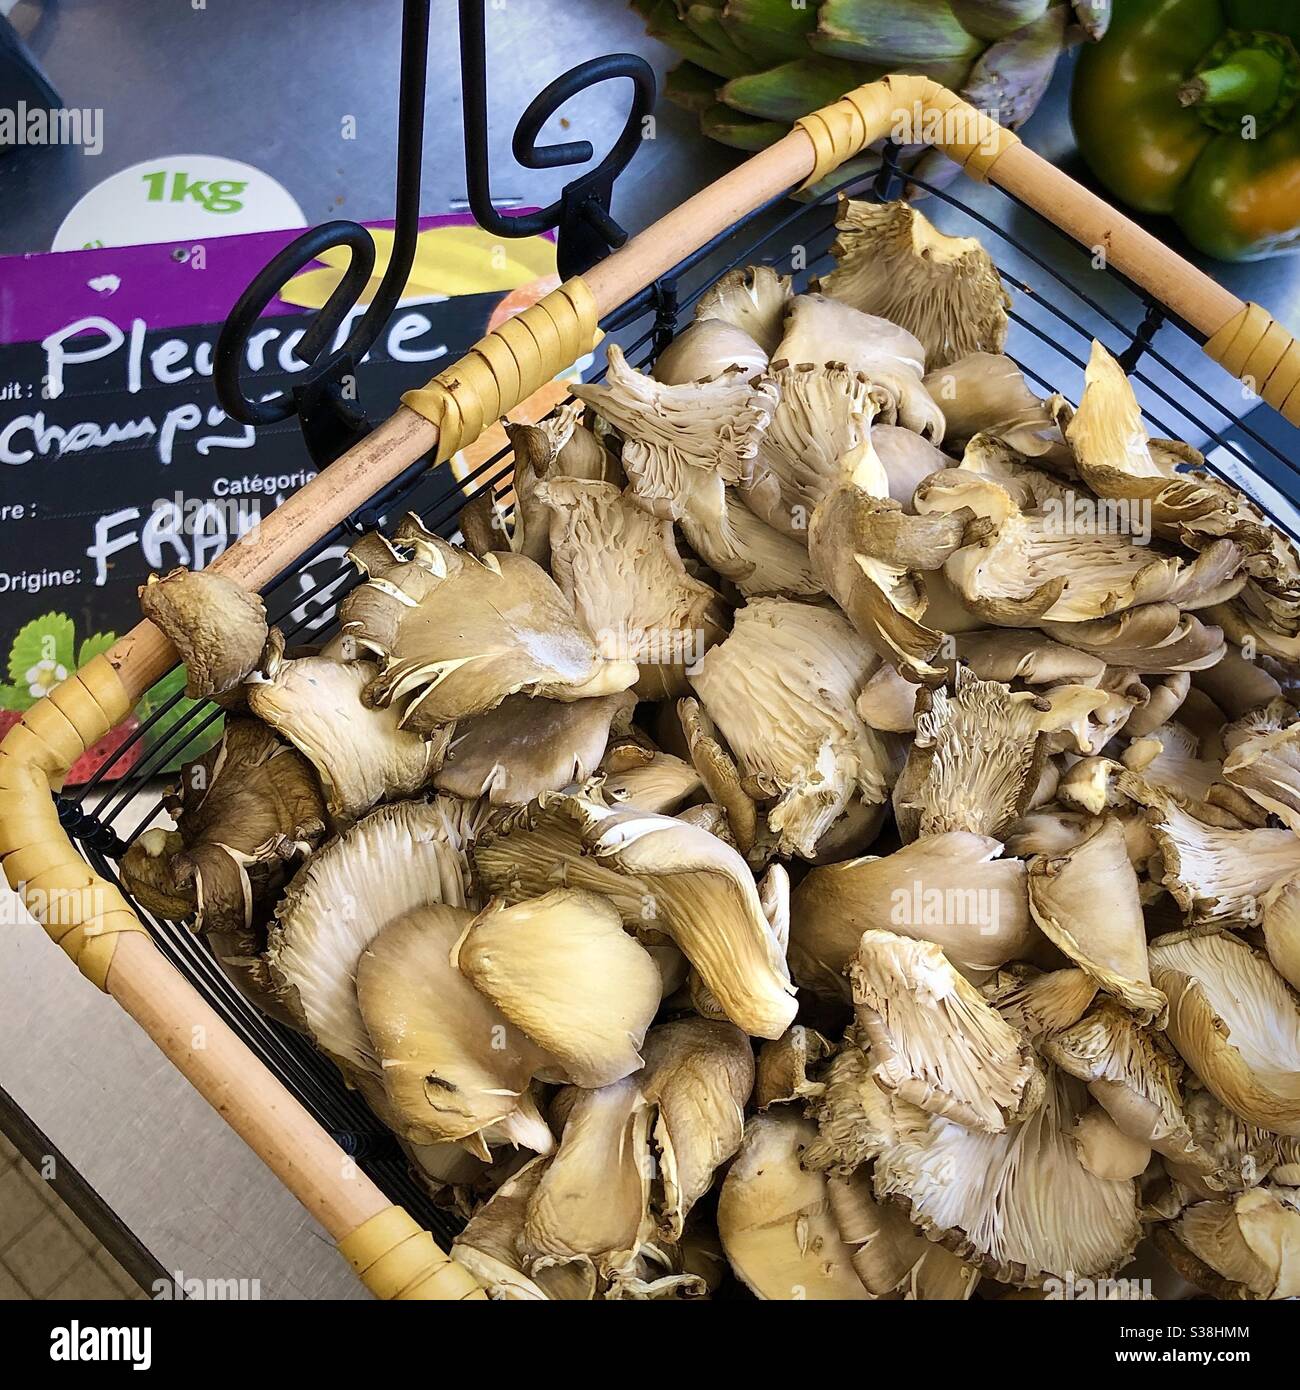 Basket of Pleurotte mushrooms. Stock Photo